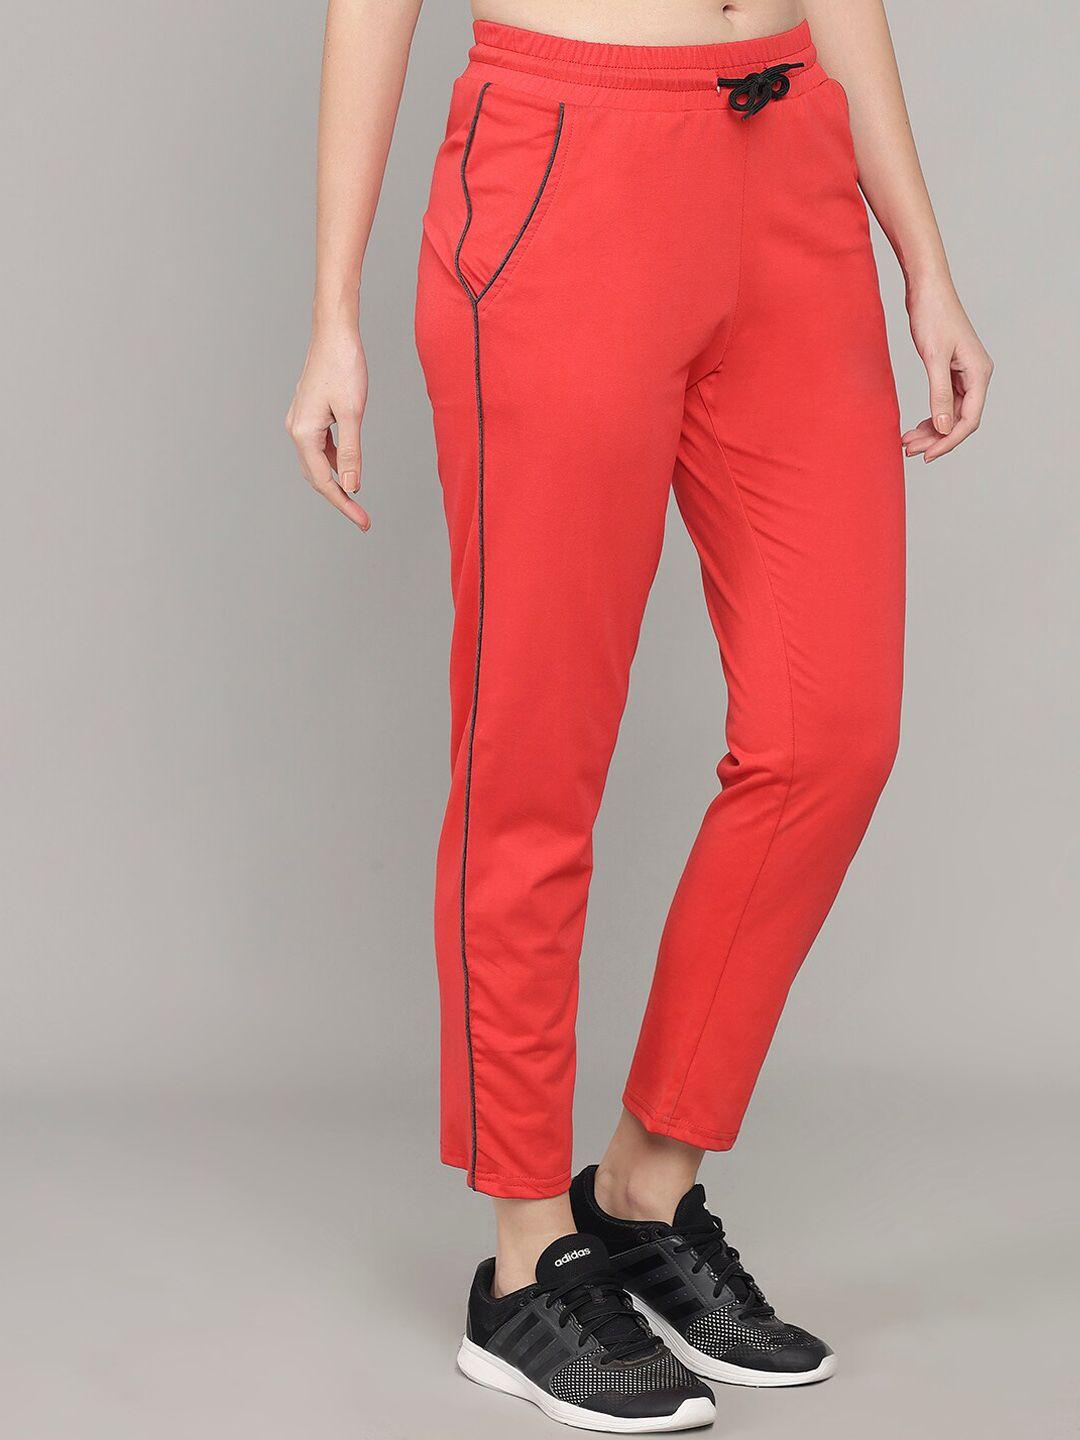 q-rious women peach solid cotton track pants